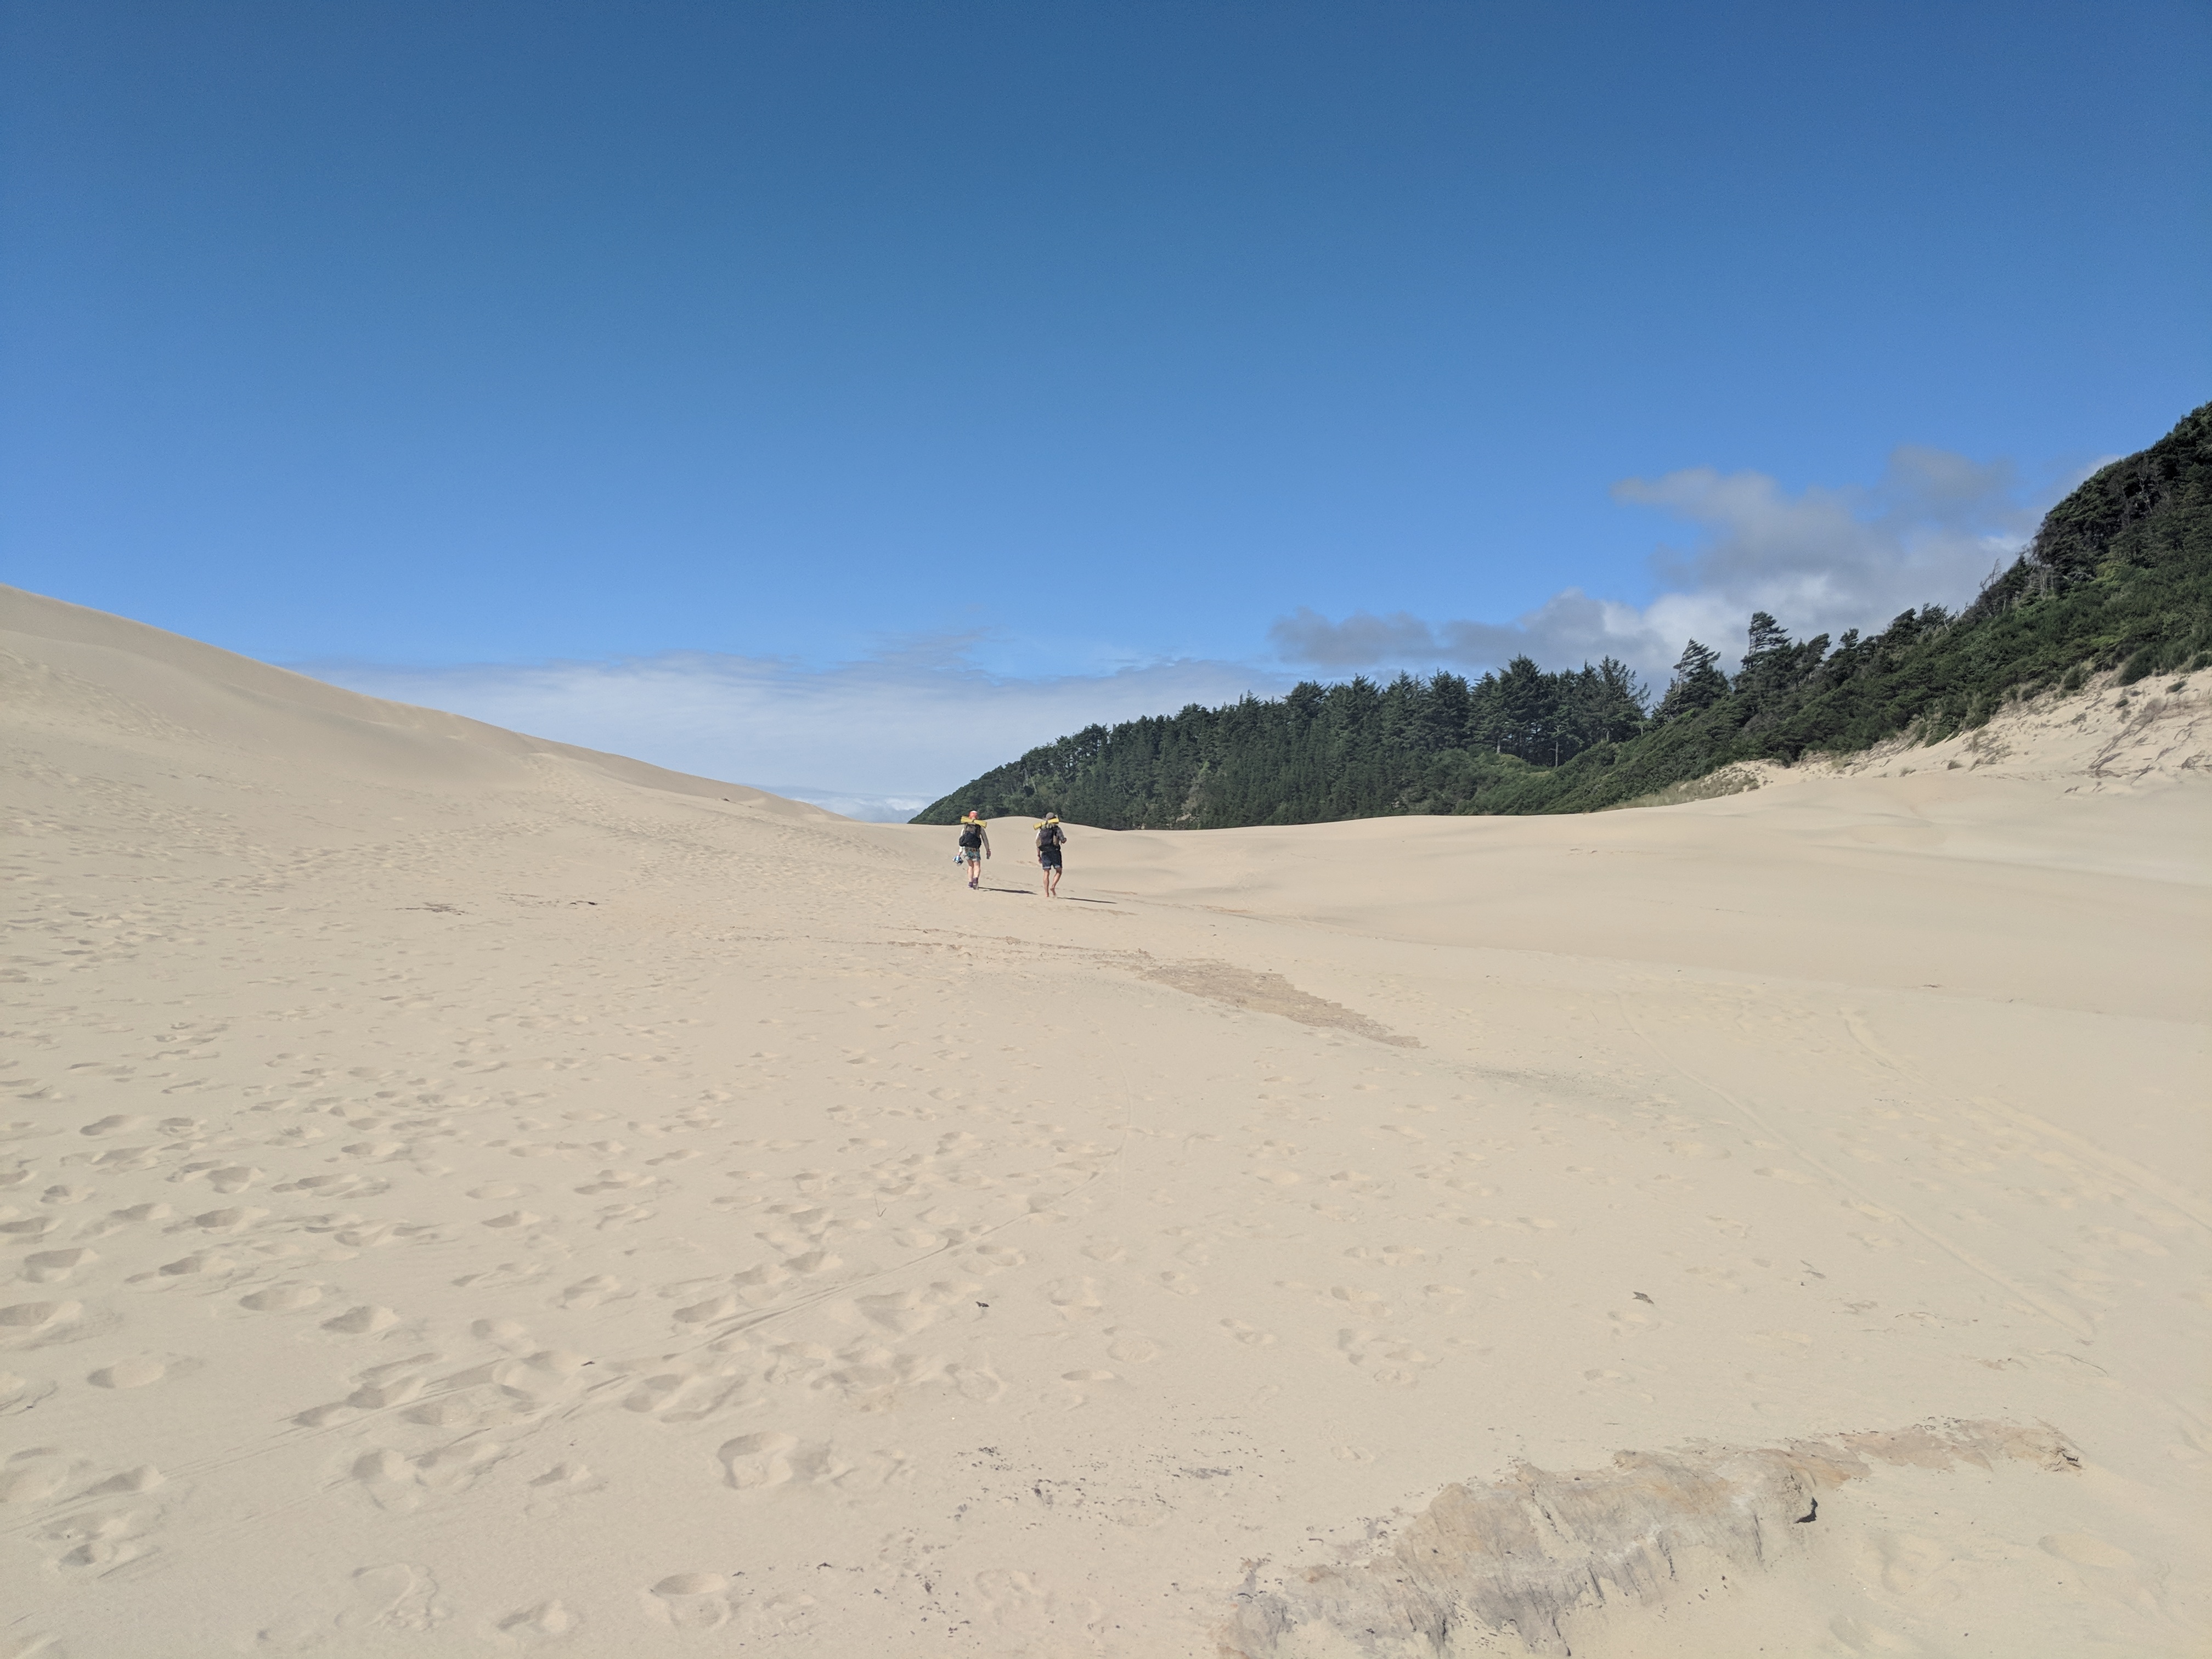 Hiking on sand along the Oregon Coast